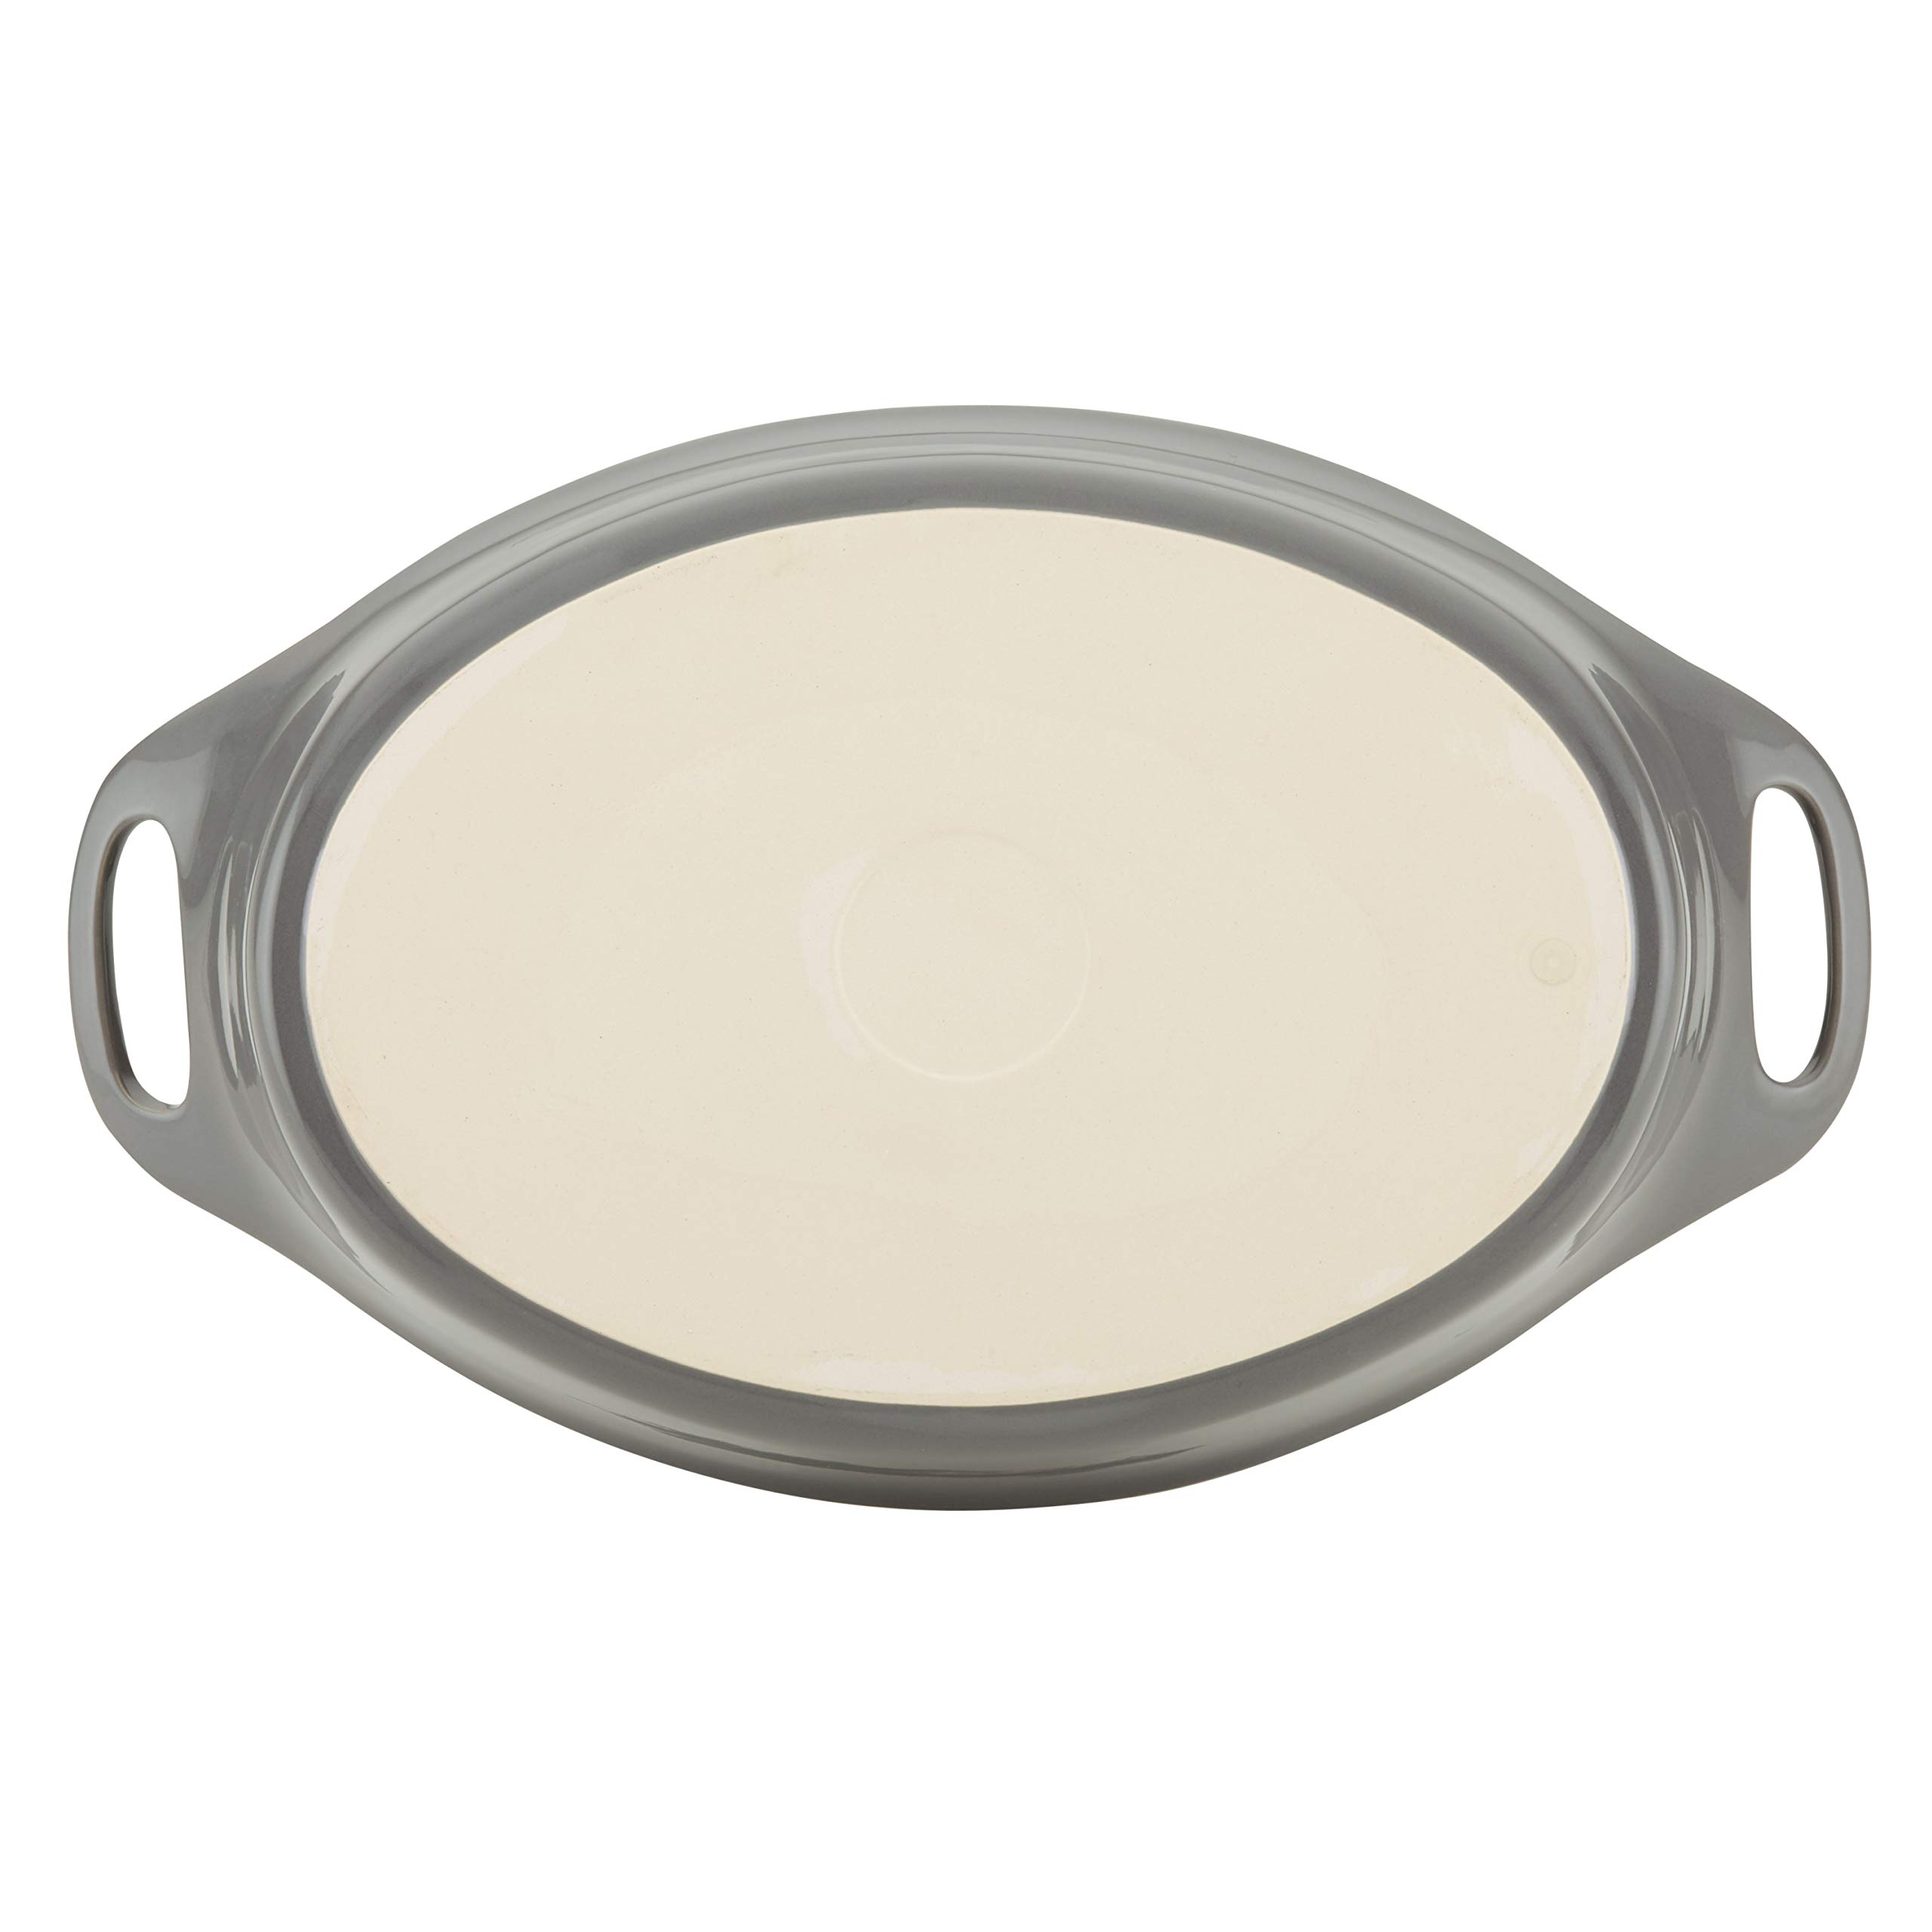 Rachael Ray Solid Glaze Ceramics Bakeware / Baking Pan, Oval - 2.5 Quart, Gray